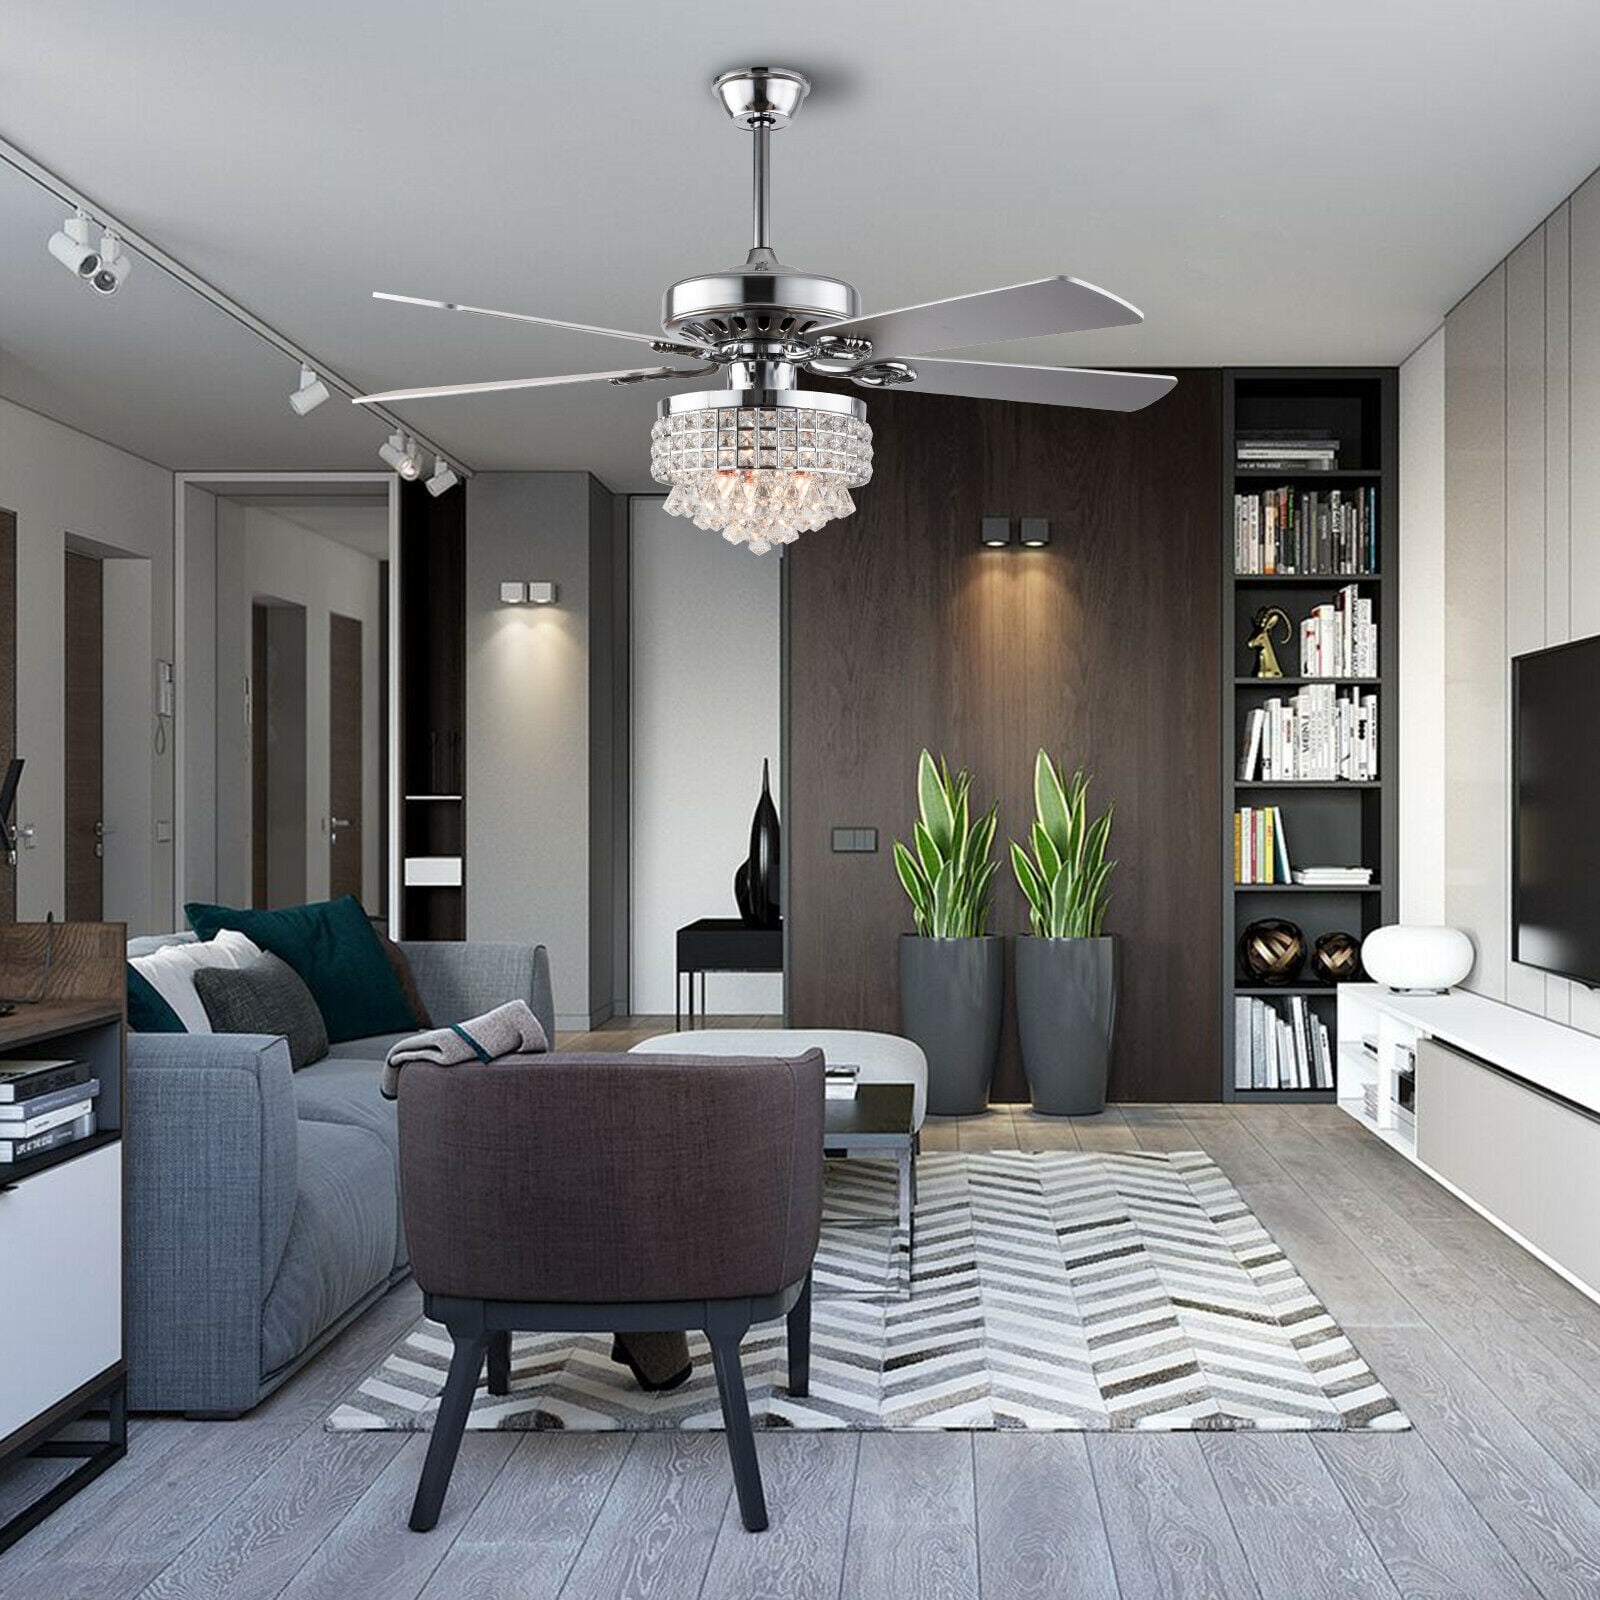 52" Retractable Crystal Fan Light Lamp Living Room Ceiling Fixture RemoteControl 